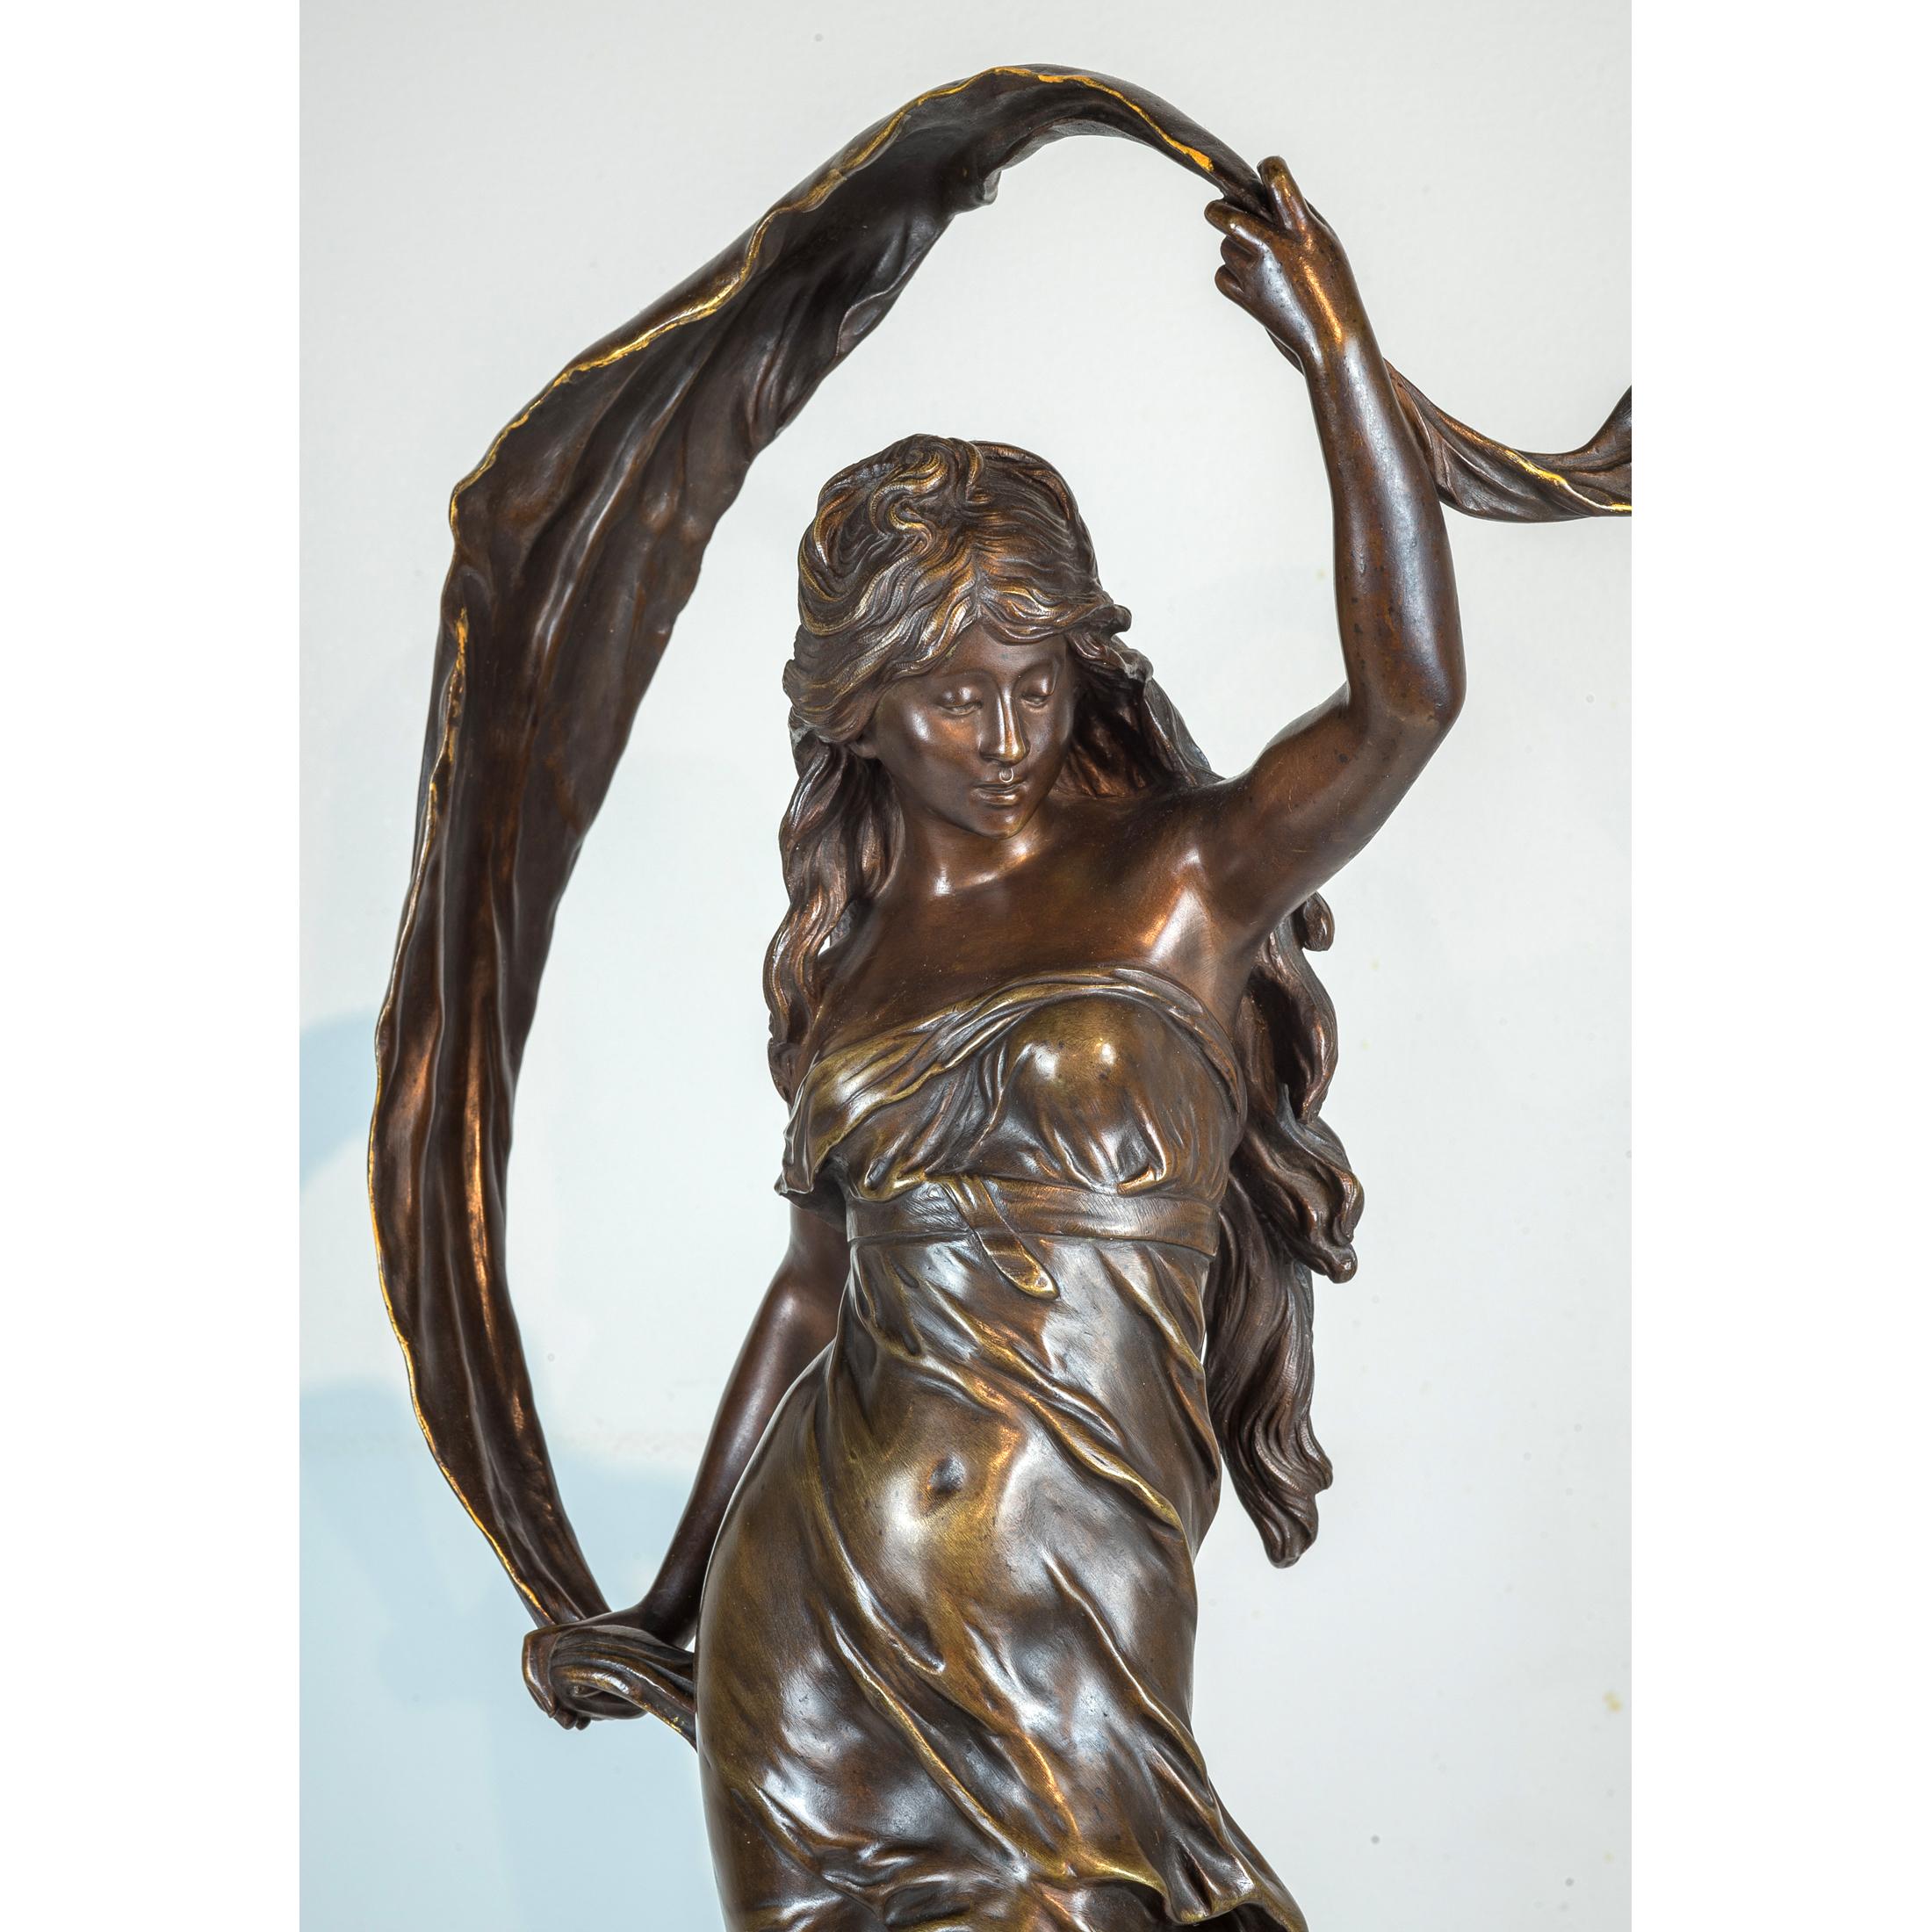 A Fine Patinated Bronze Statue Entitled ‘AURORE’ by Auguste Moreau - Gold Figurative Sculpture by Louis Auguste Moreau